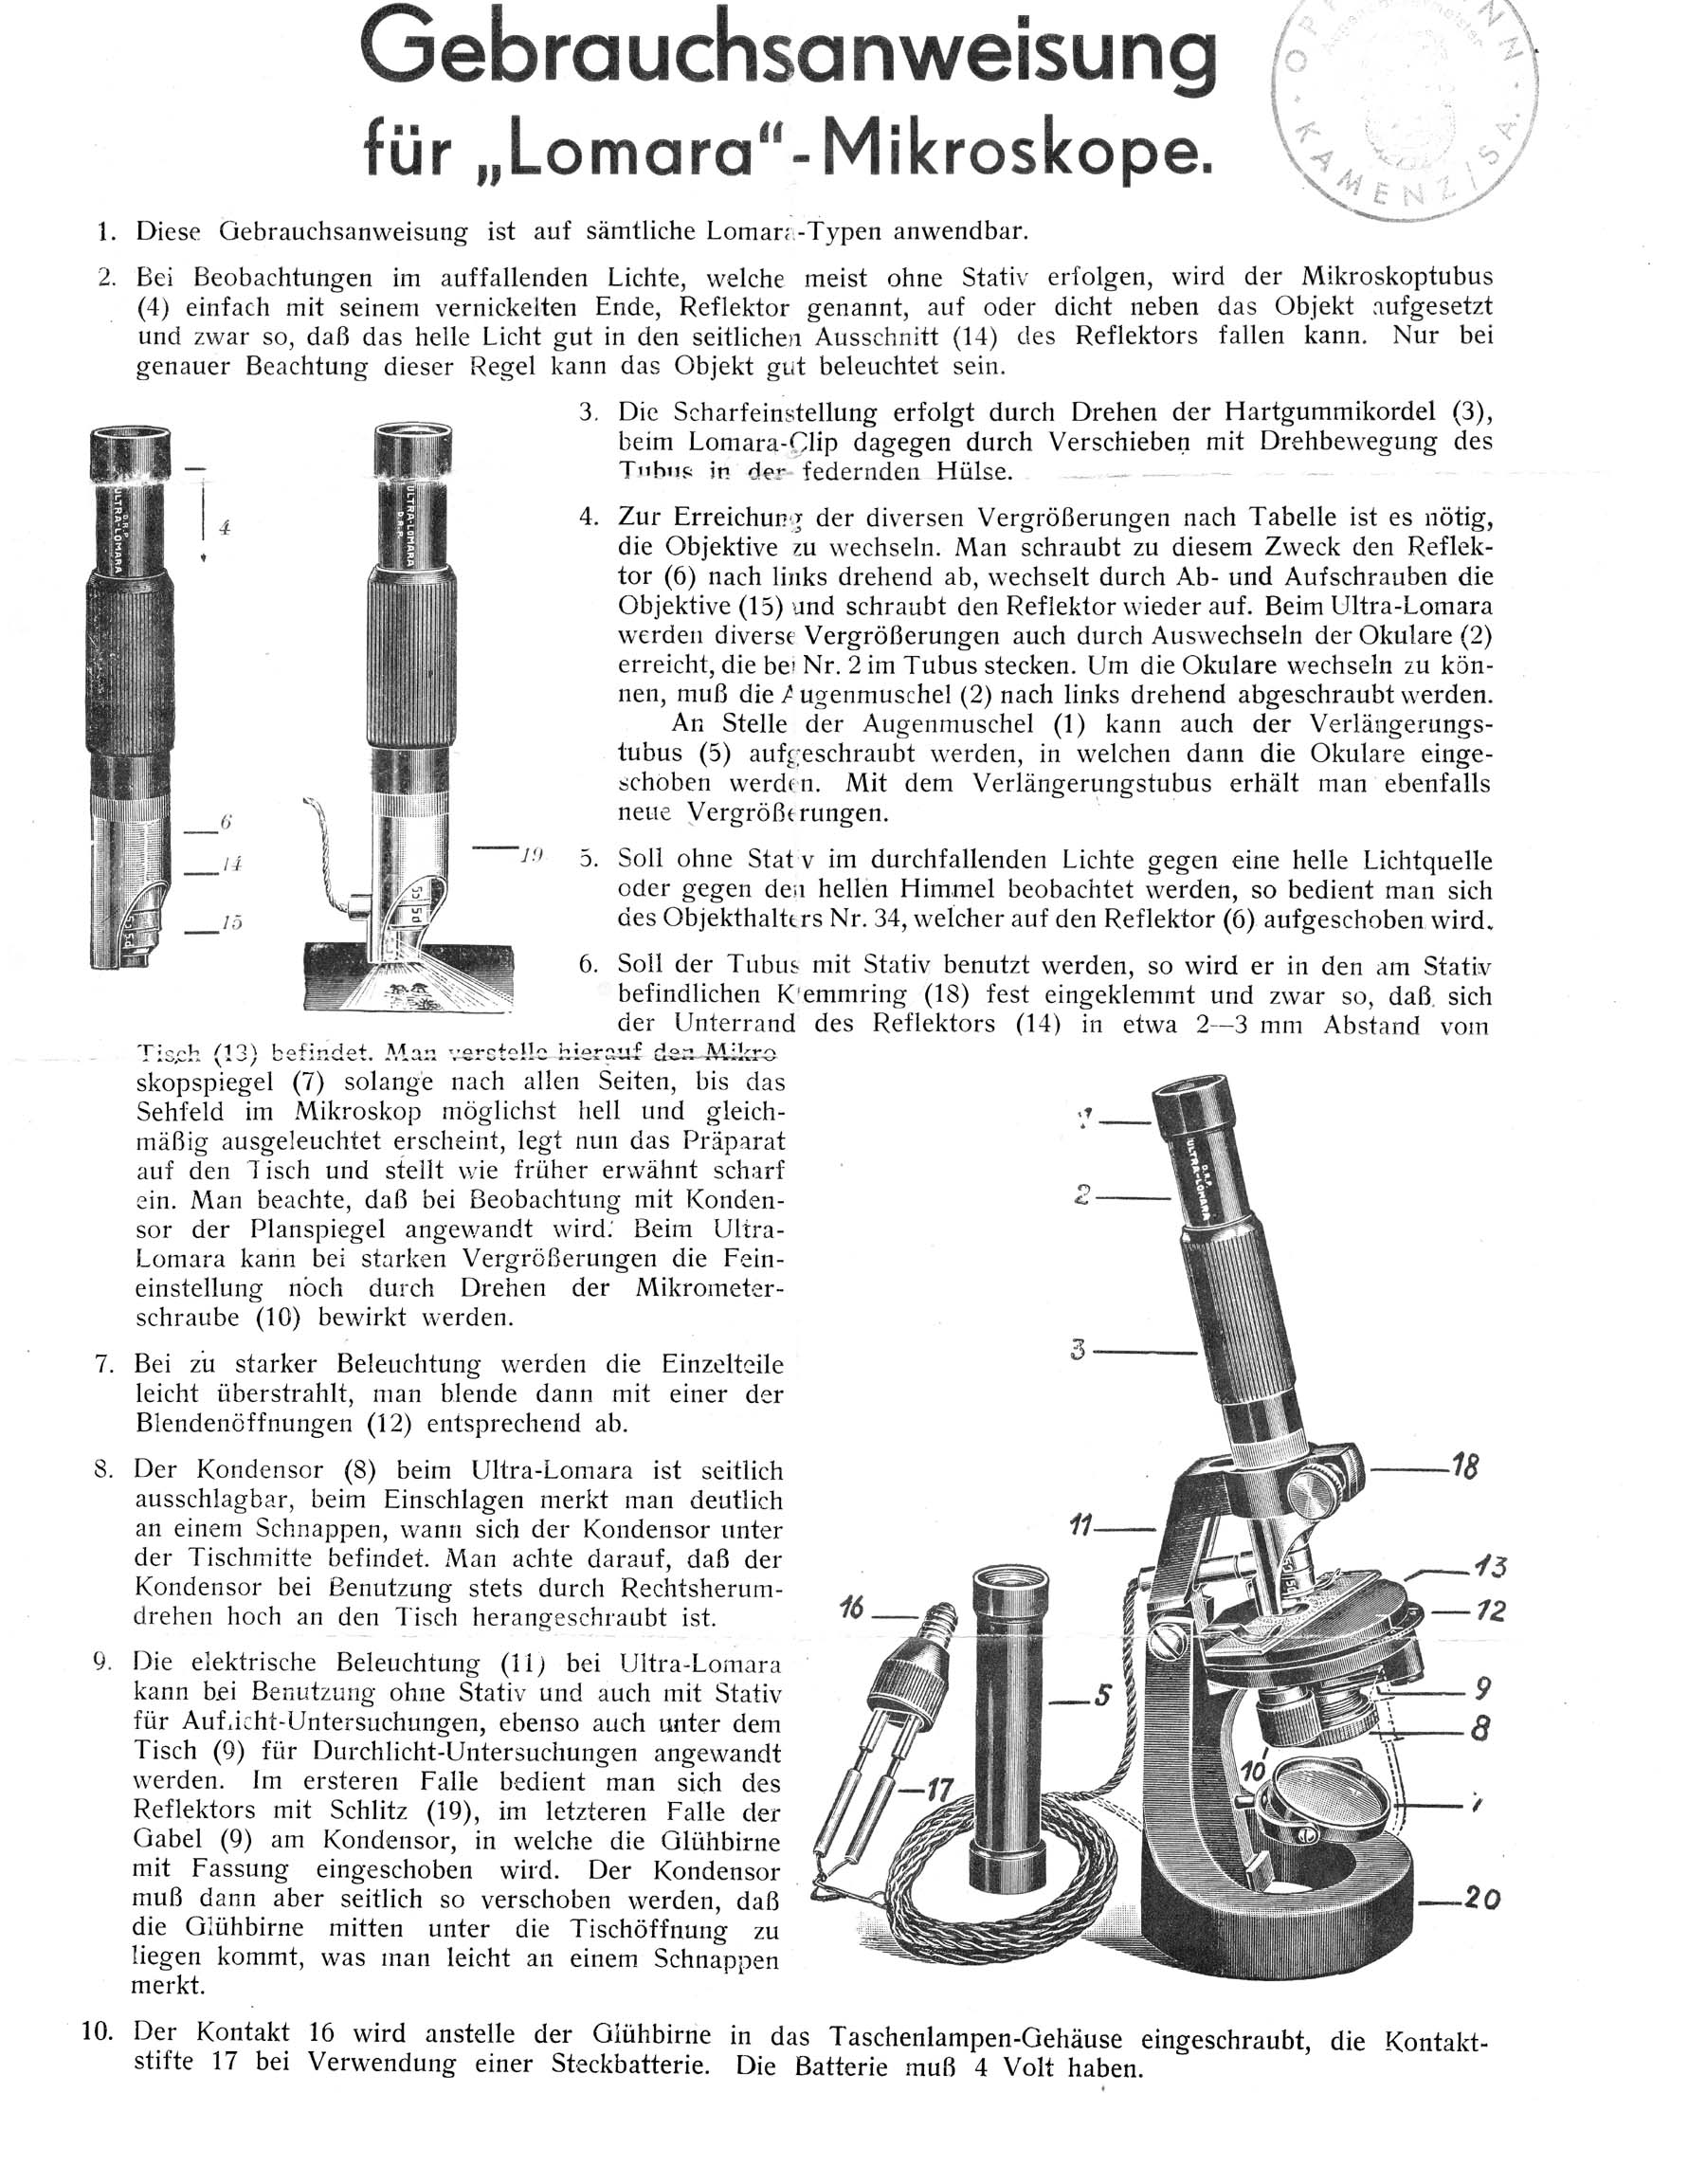 instructions for the Ultralomara microscope